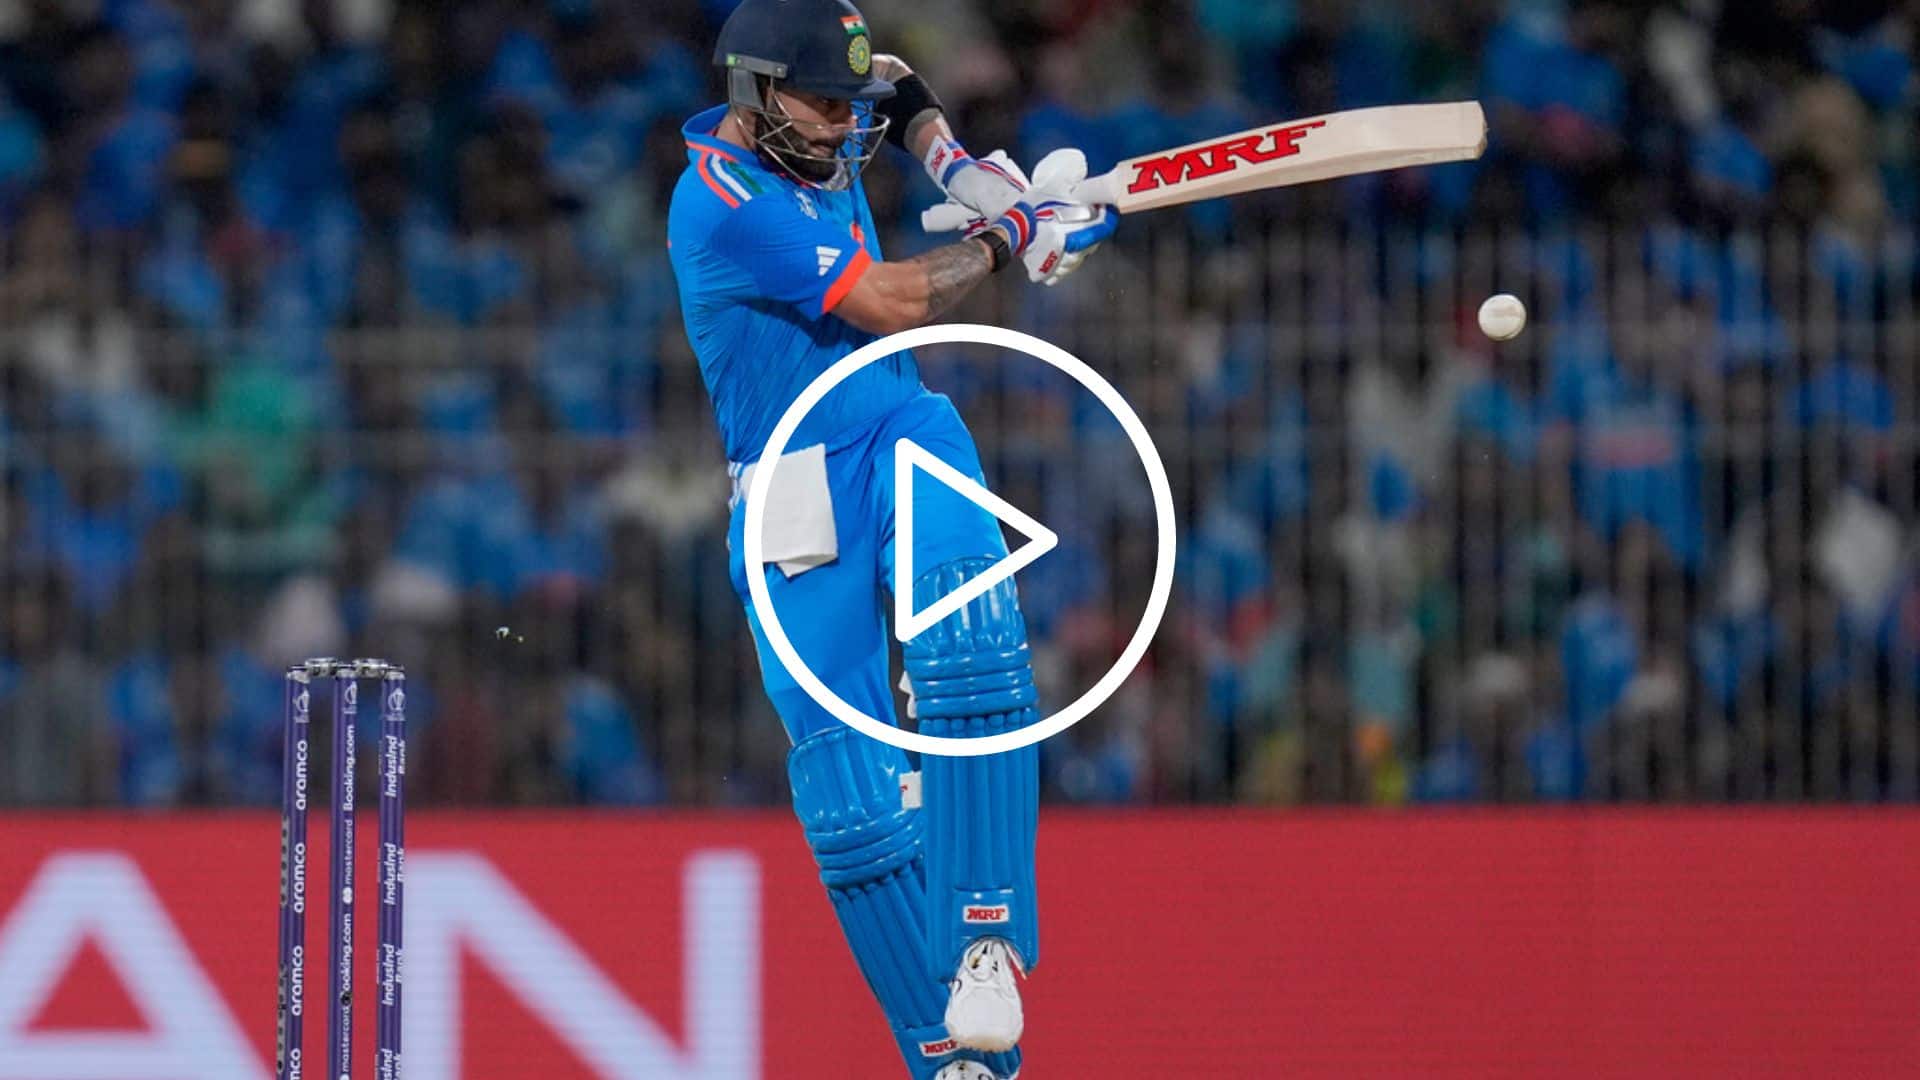 [Watch] Virat Kohli Completes 67th ODI Fifty With A Sensational Hook Shot